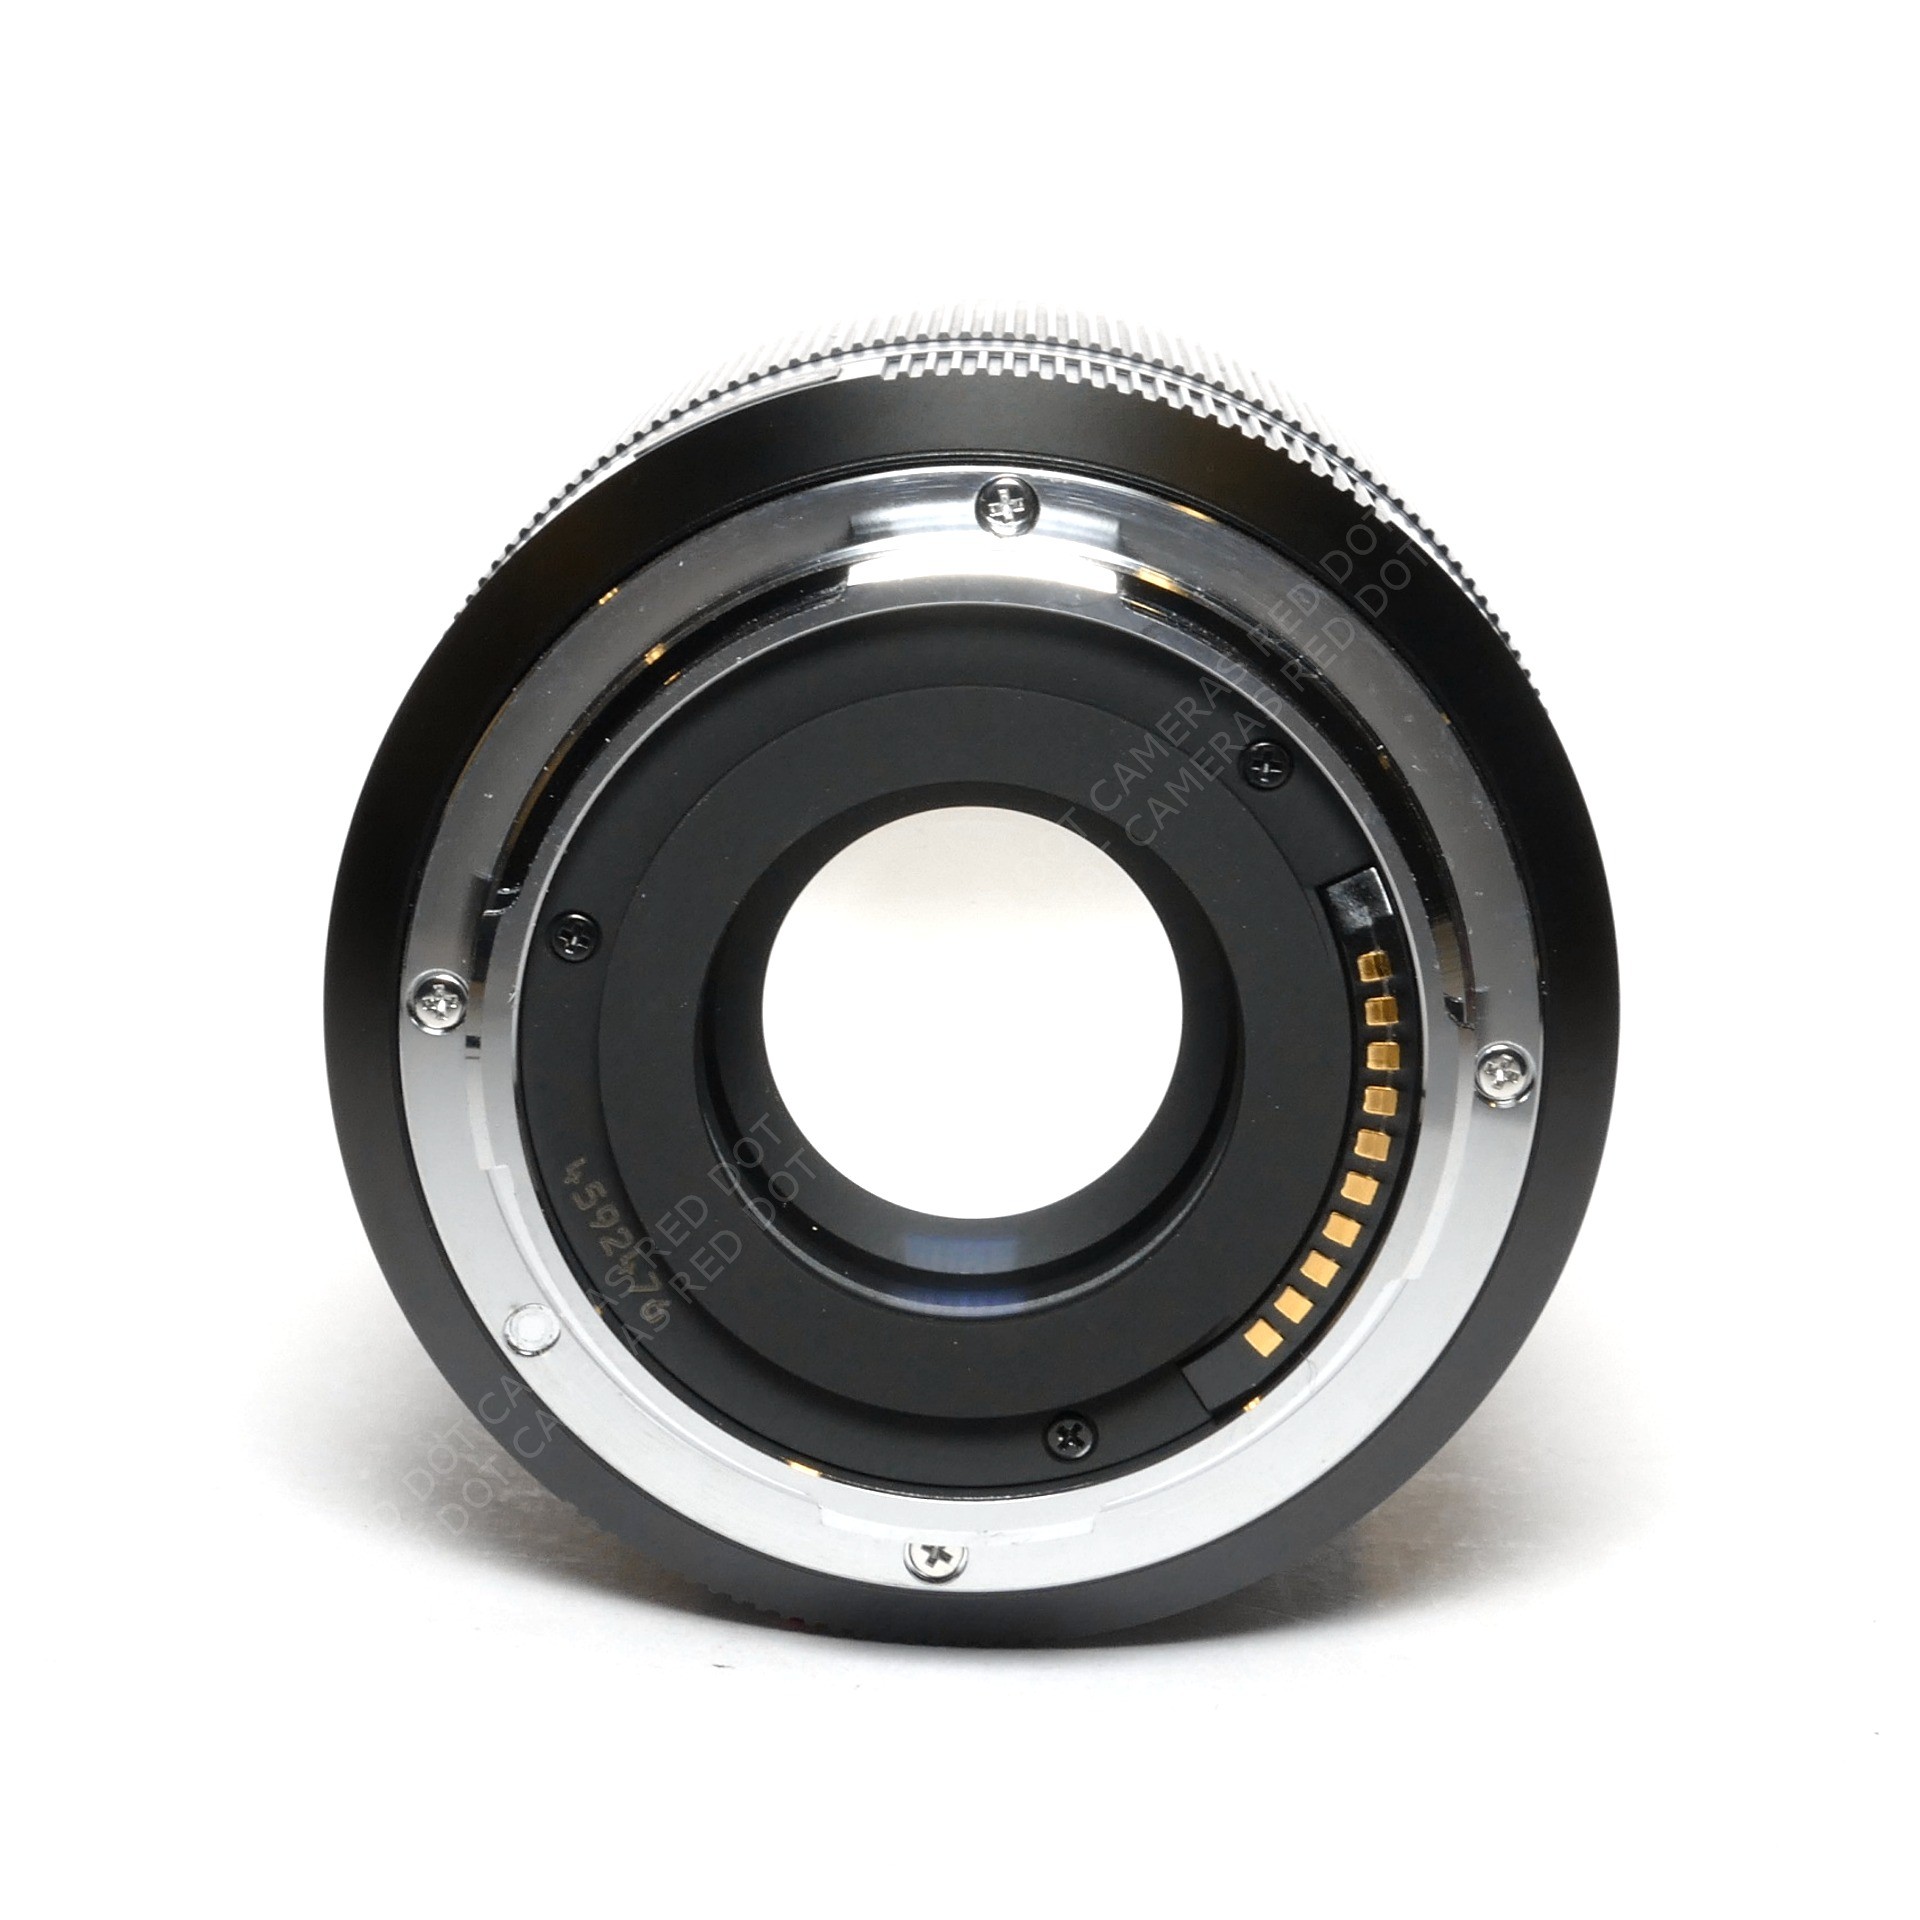 Leica Summilux-TL 35mm f1.4 Lens